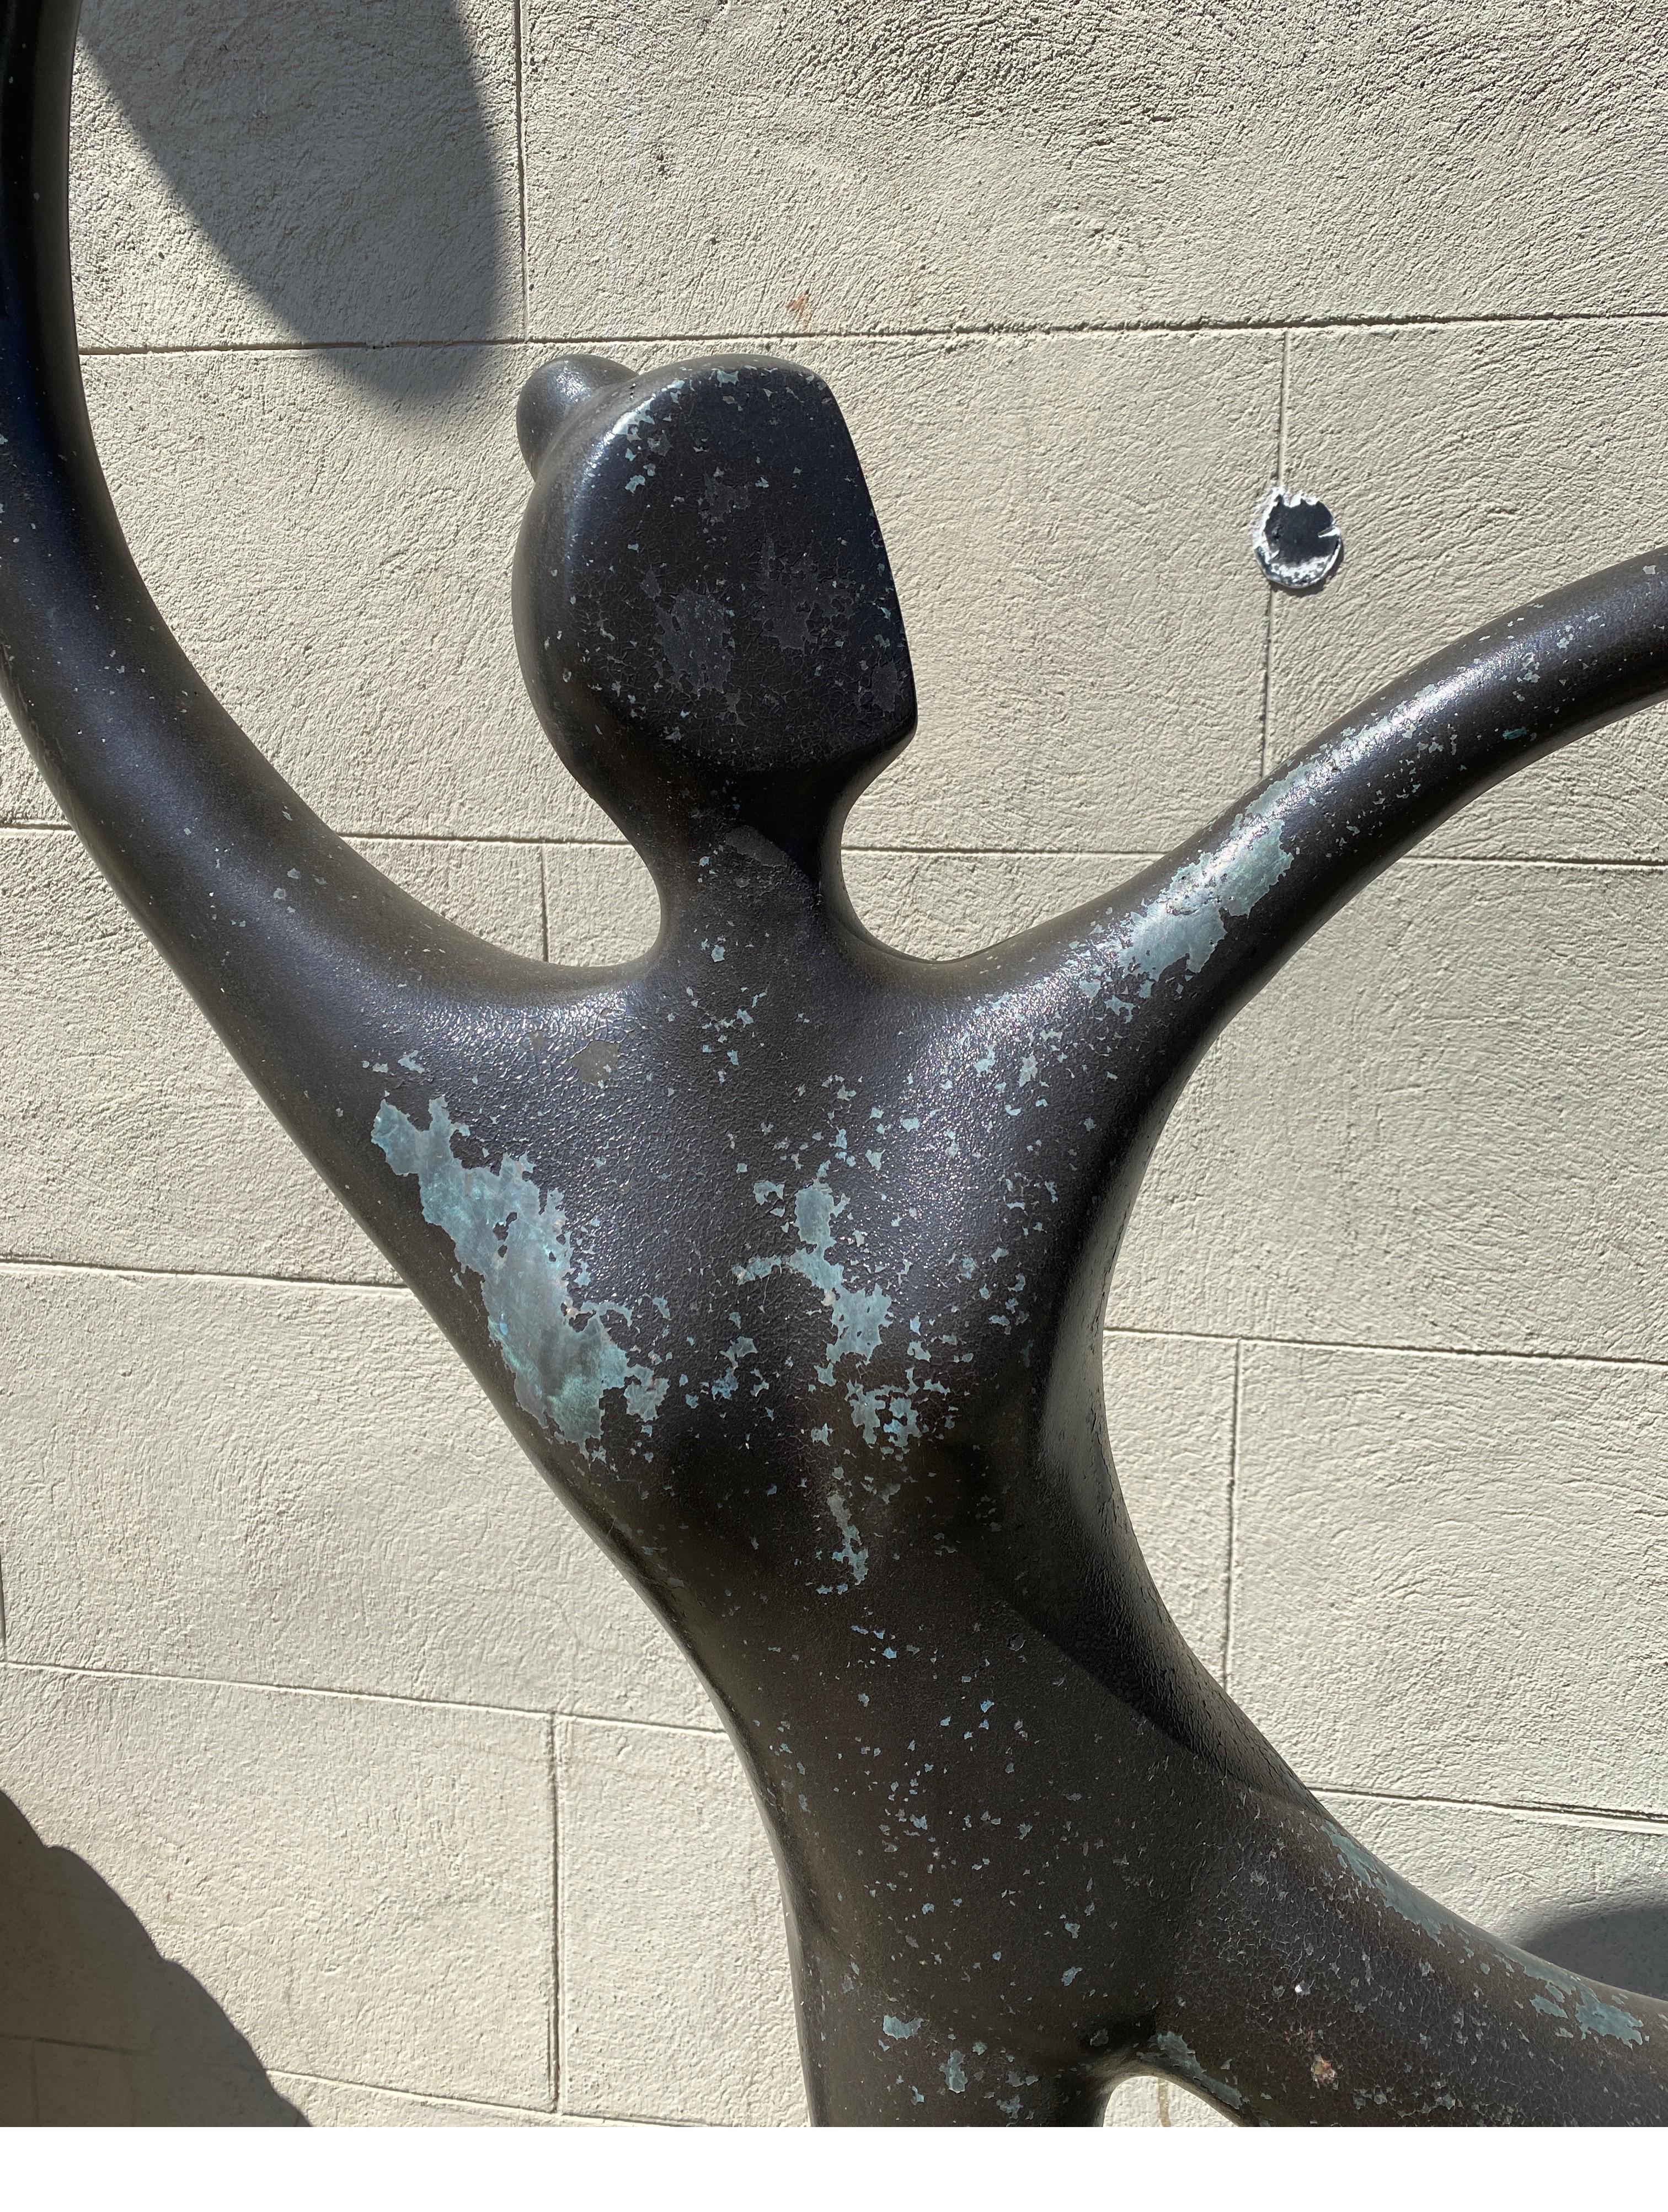 Post-Modern Bronze Sculpture Titled Bailarines by Jose Almanzor 1962-2015